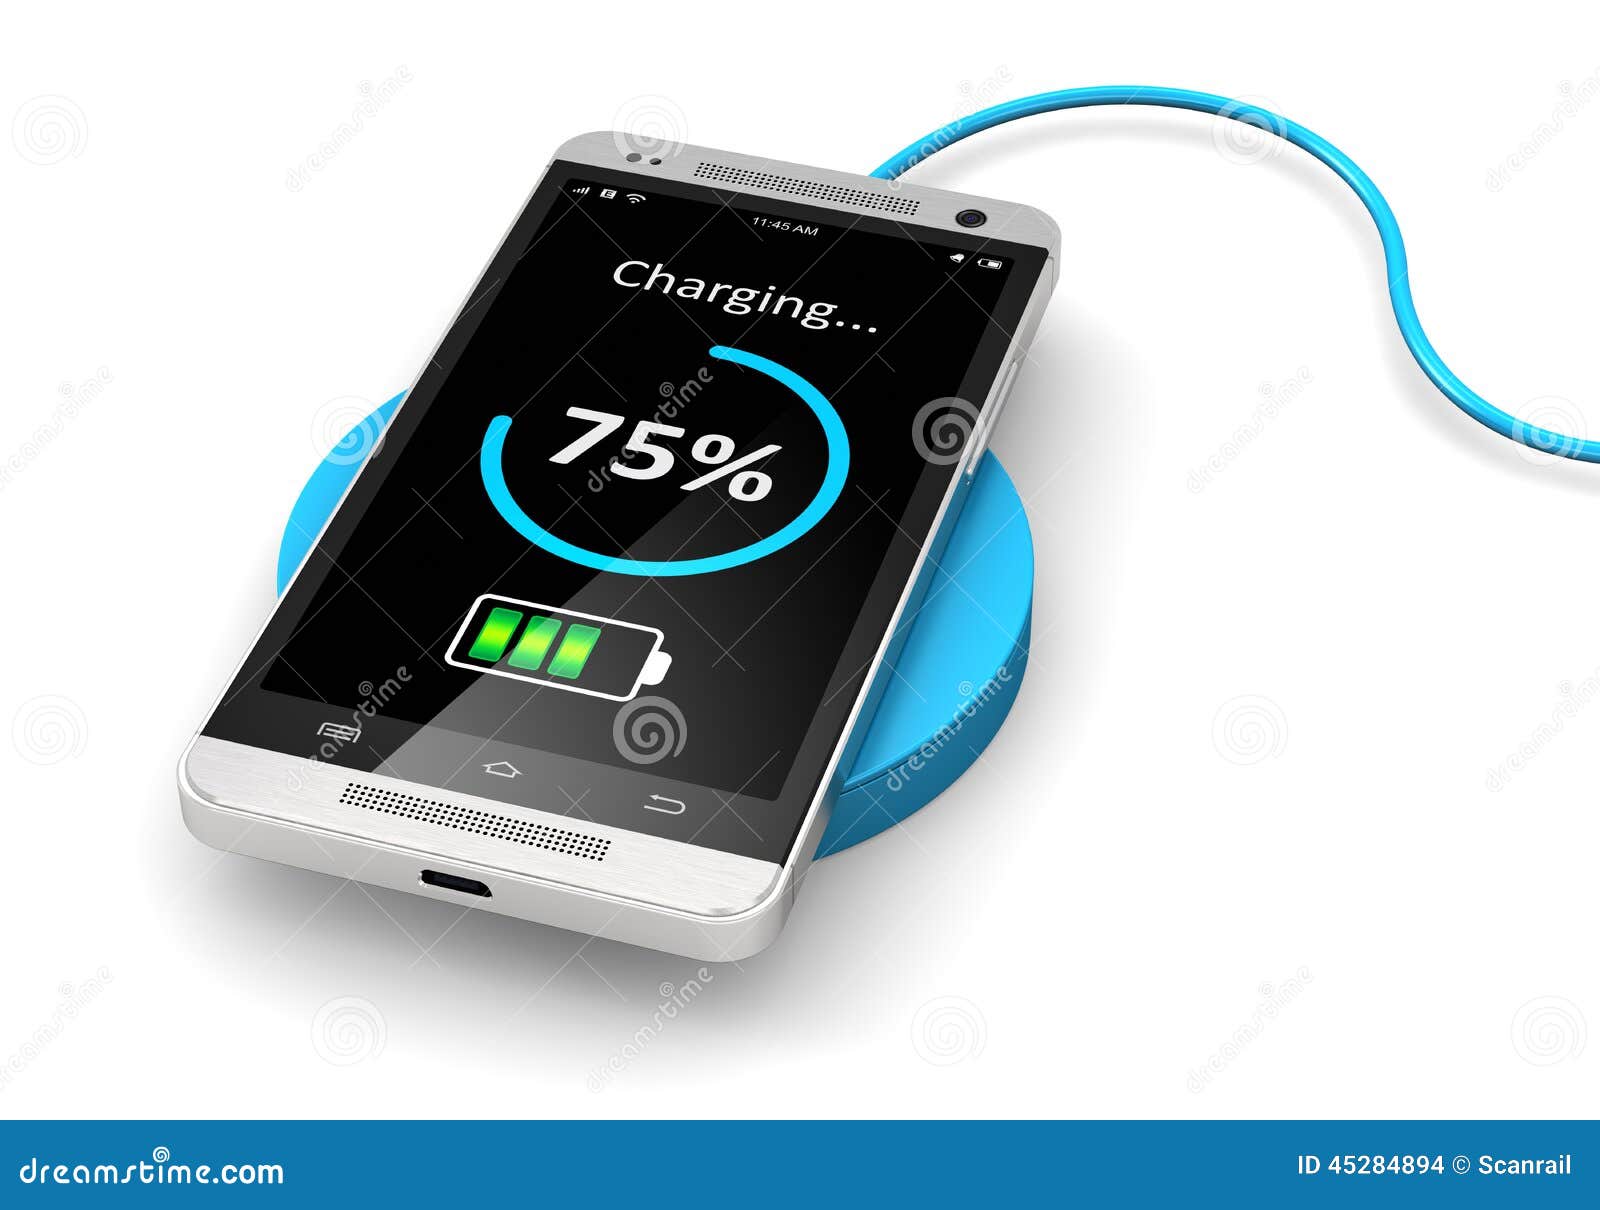 wireless charging of smartphone